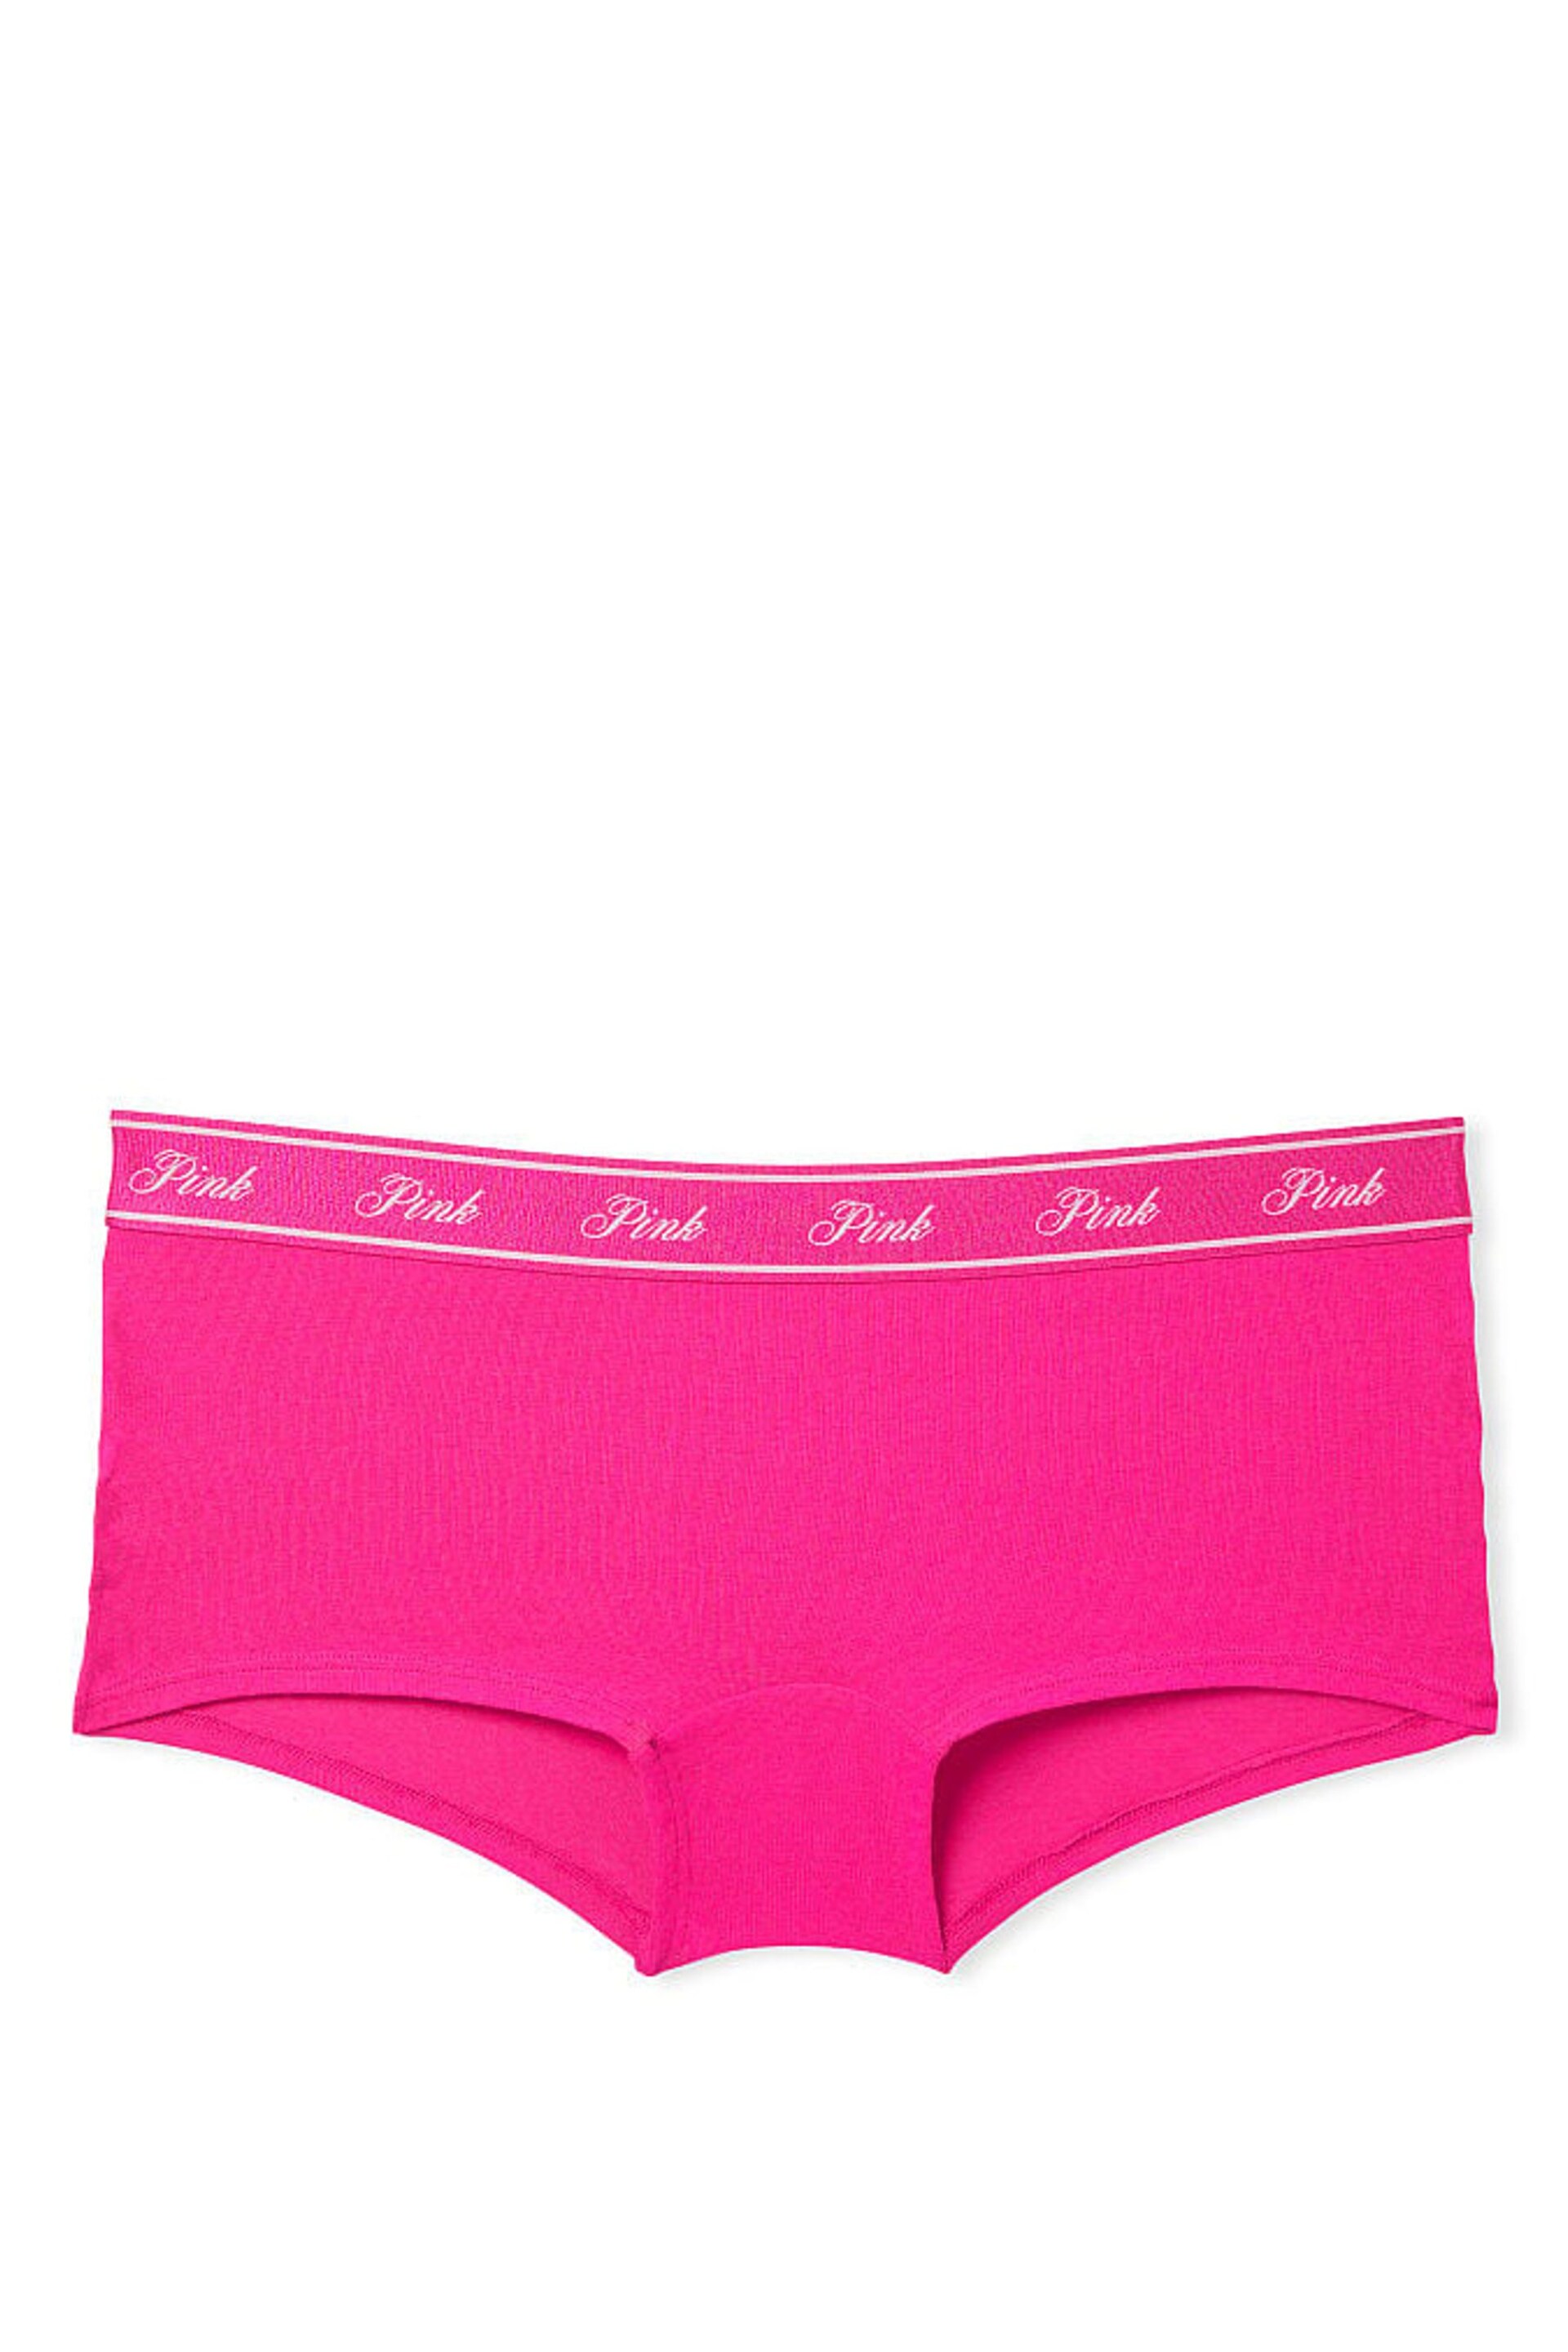 Victoria's Secret PINK Enchanted Pink Cotton Logo Boyshort Knickers - Image 3 of 3